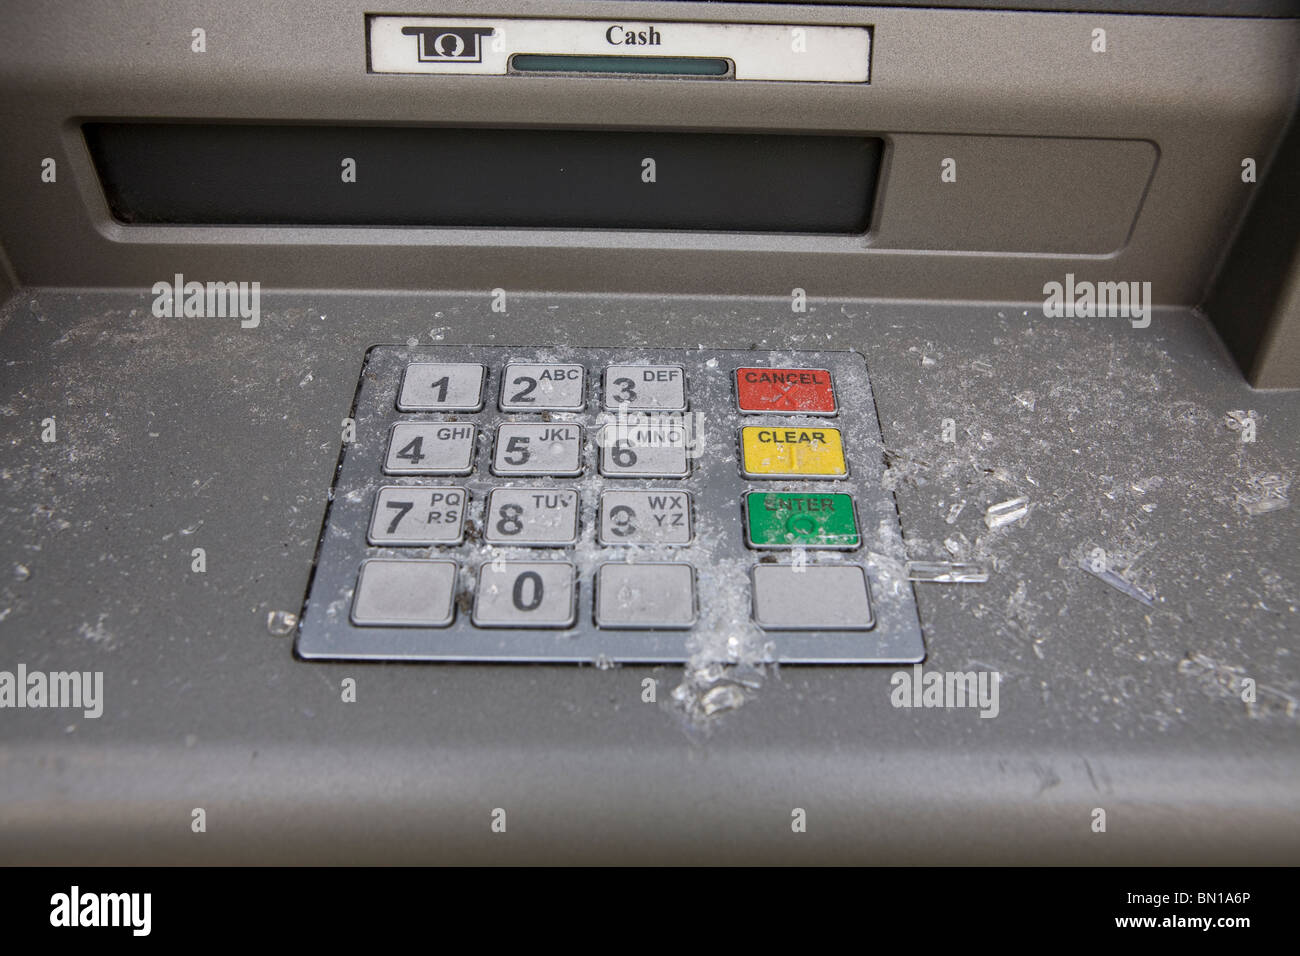 vandalized atm cash machine in London Stock Photo